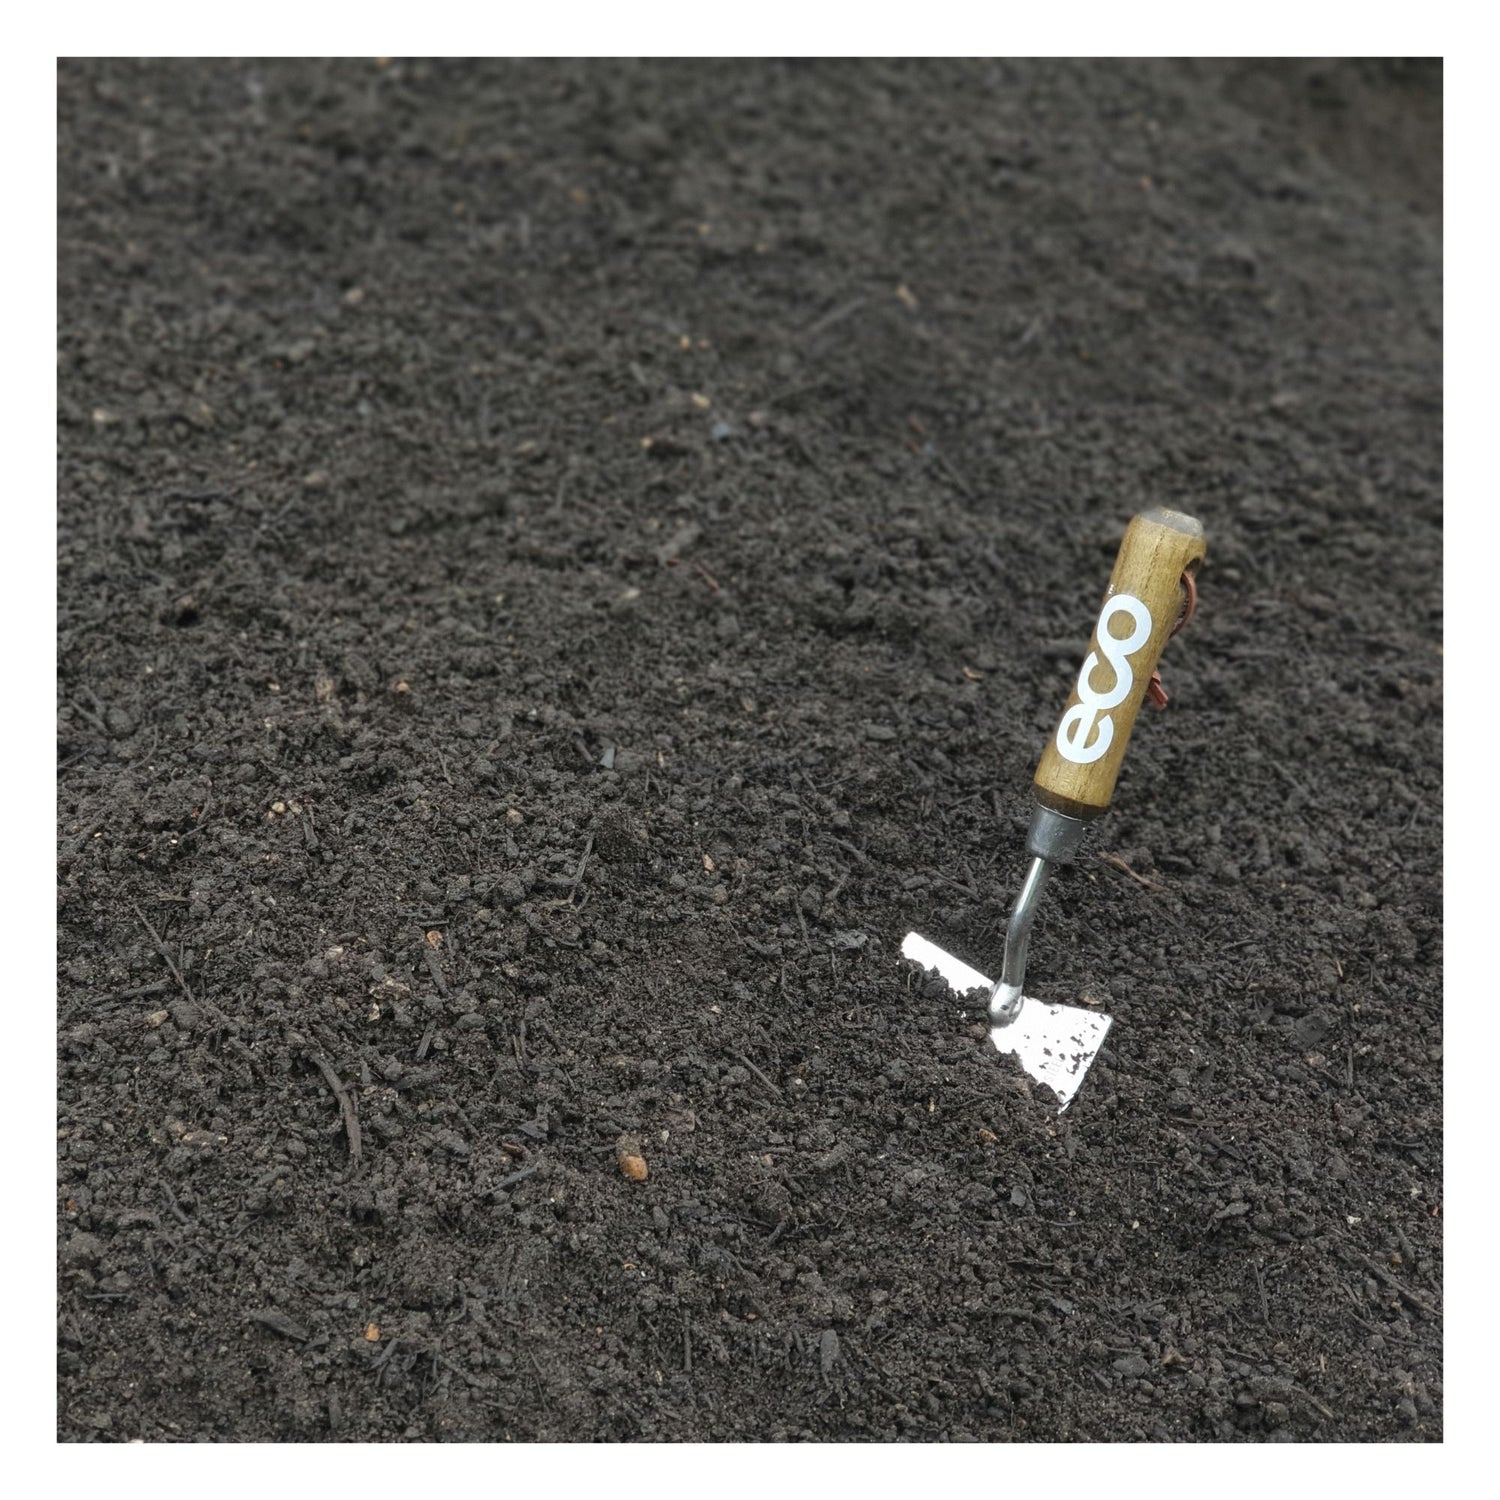 Eco organic topsoil with shovel